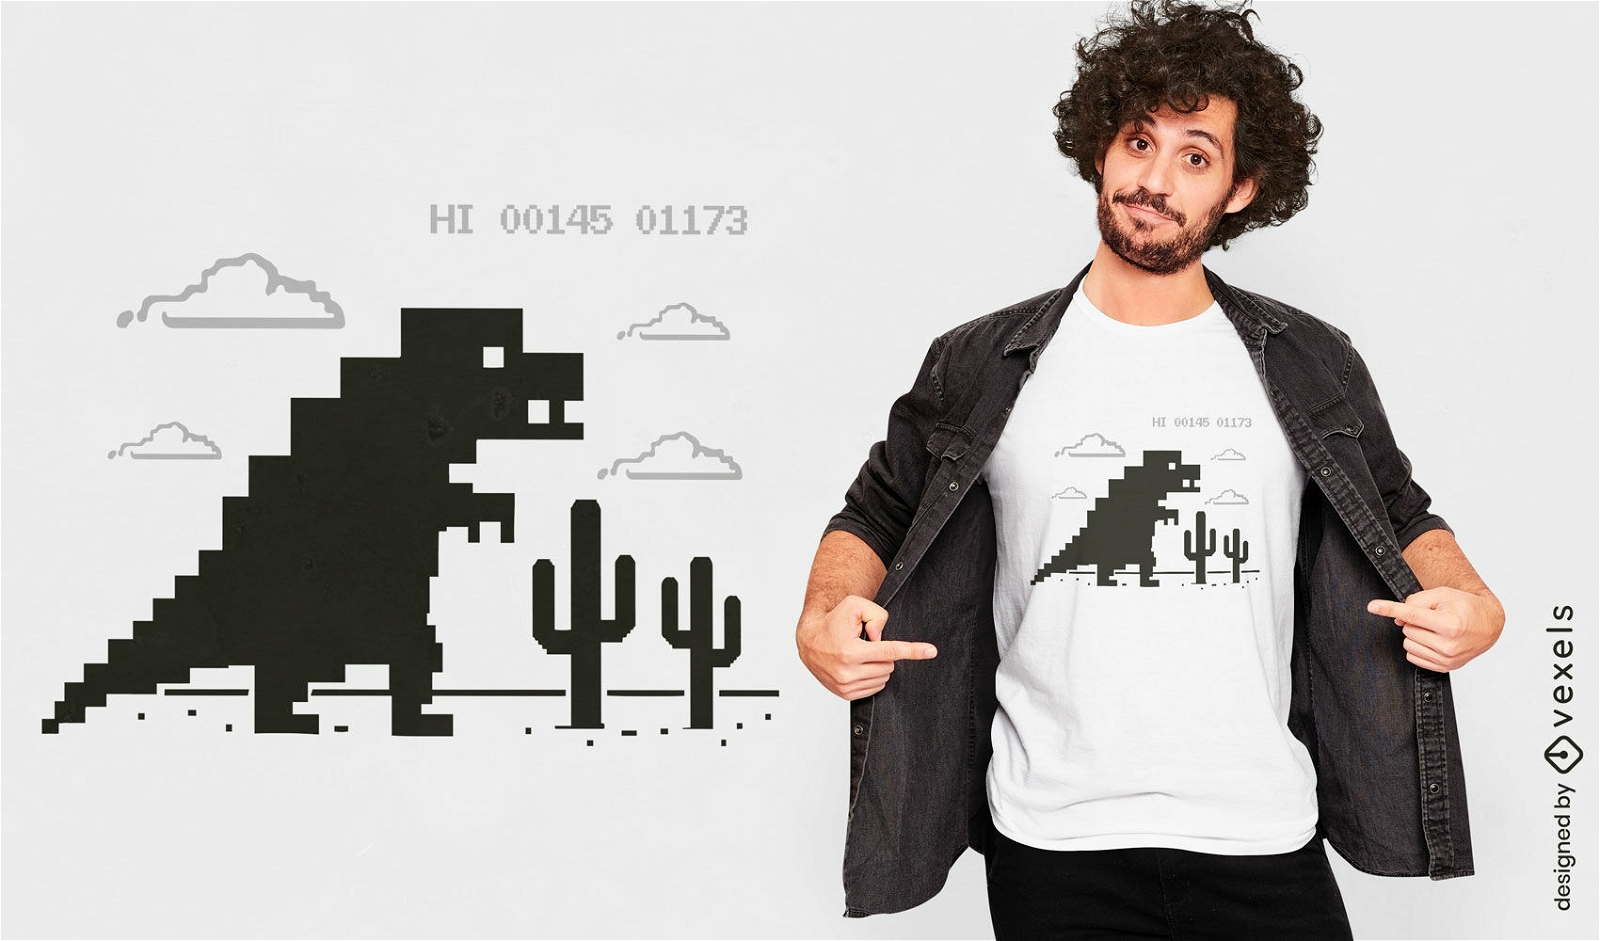 Dinosaur offline game t-shirt design